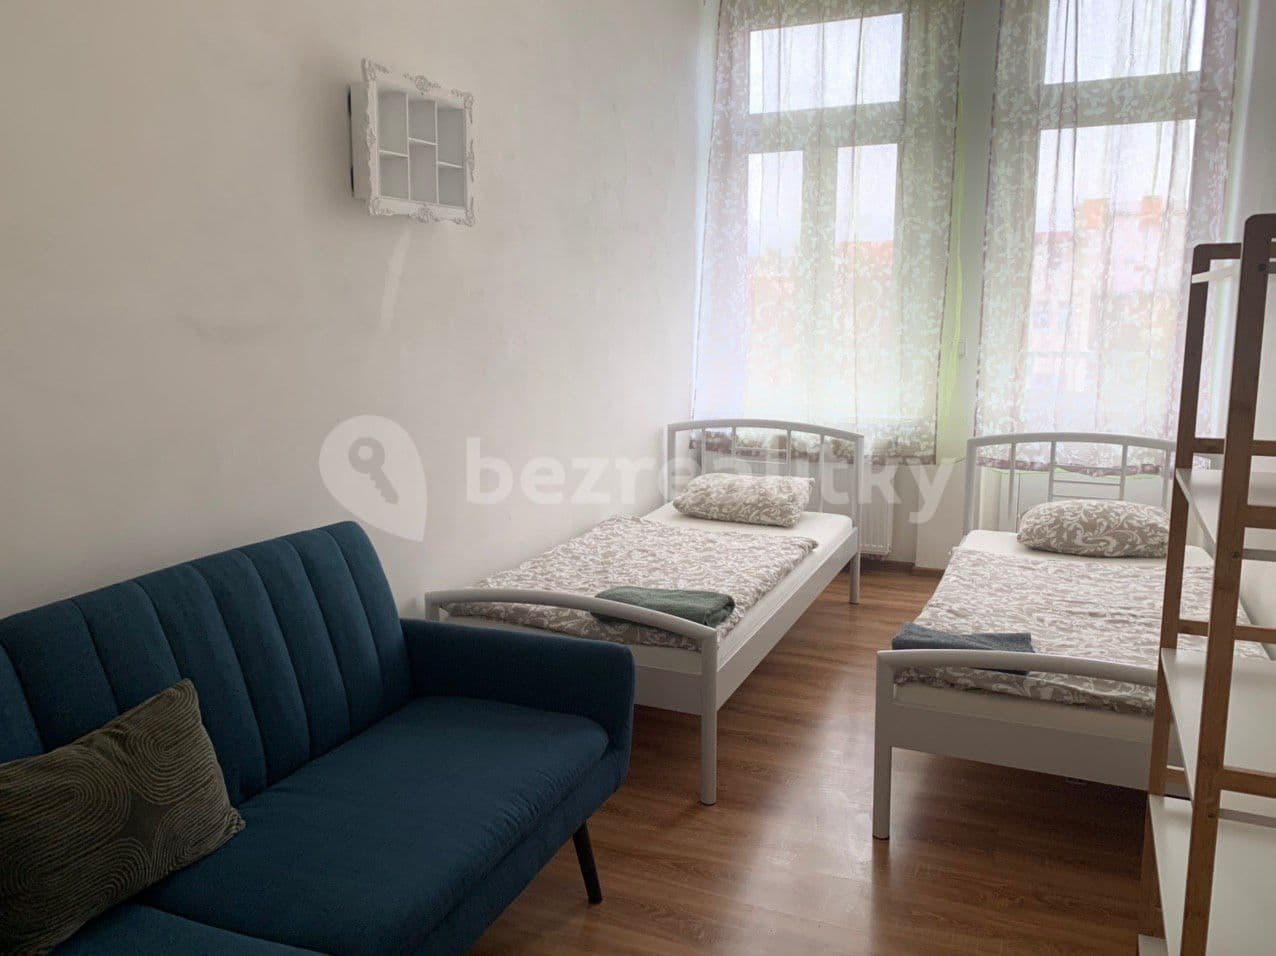 1 bedroom with open-plan kitchen flat to rent, 65 m², Ruská, Teplice, Ústecký Region